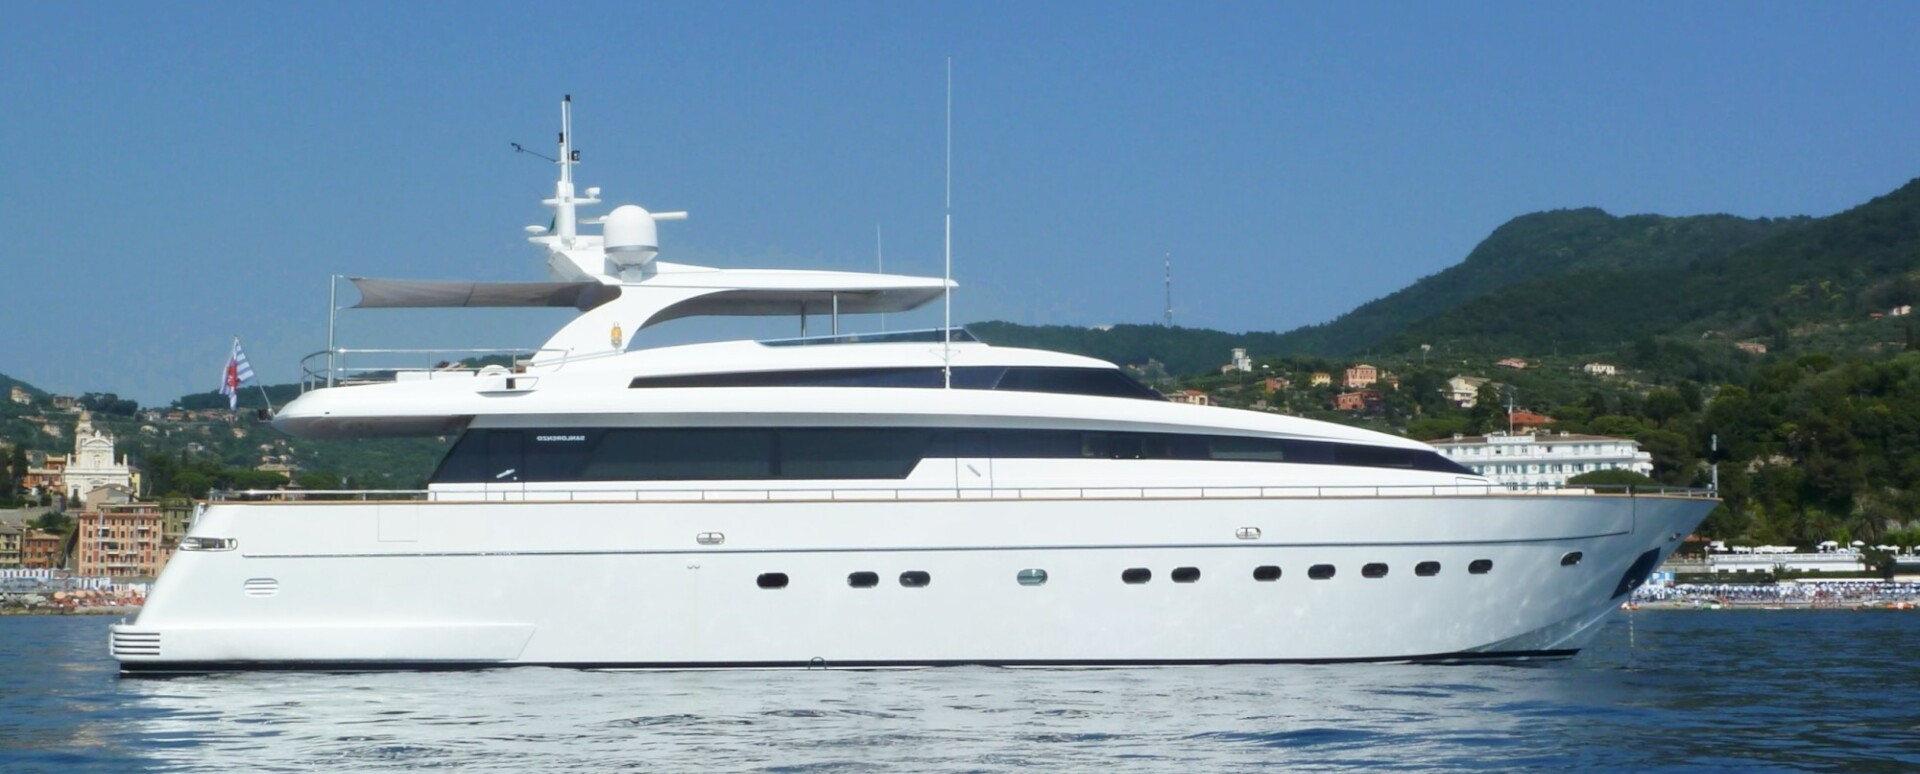                                                                                                     KK Superyachts lists 30m Sanlorenzo SL100 M/Y SUD for sale
                                                                                            